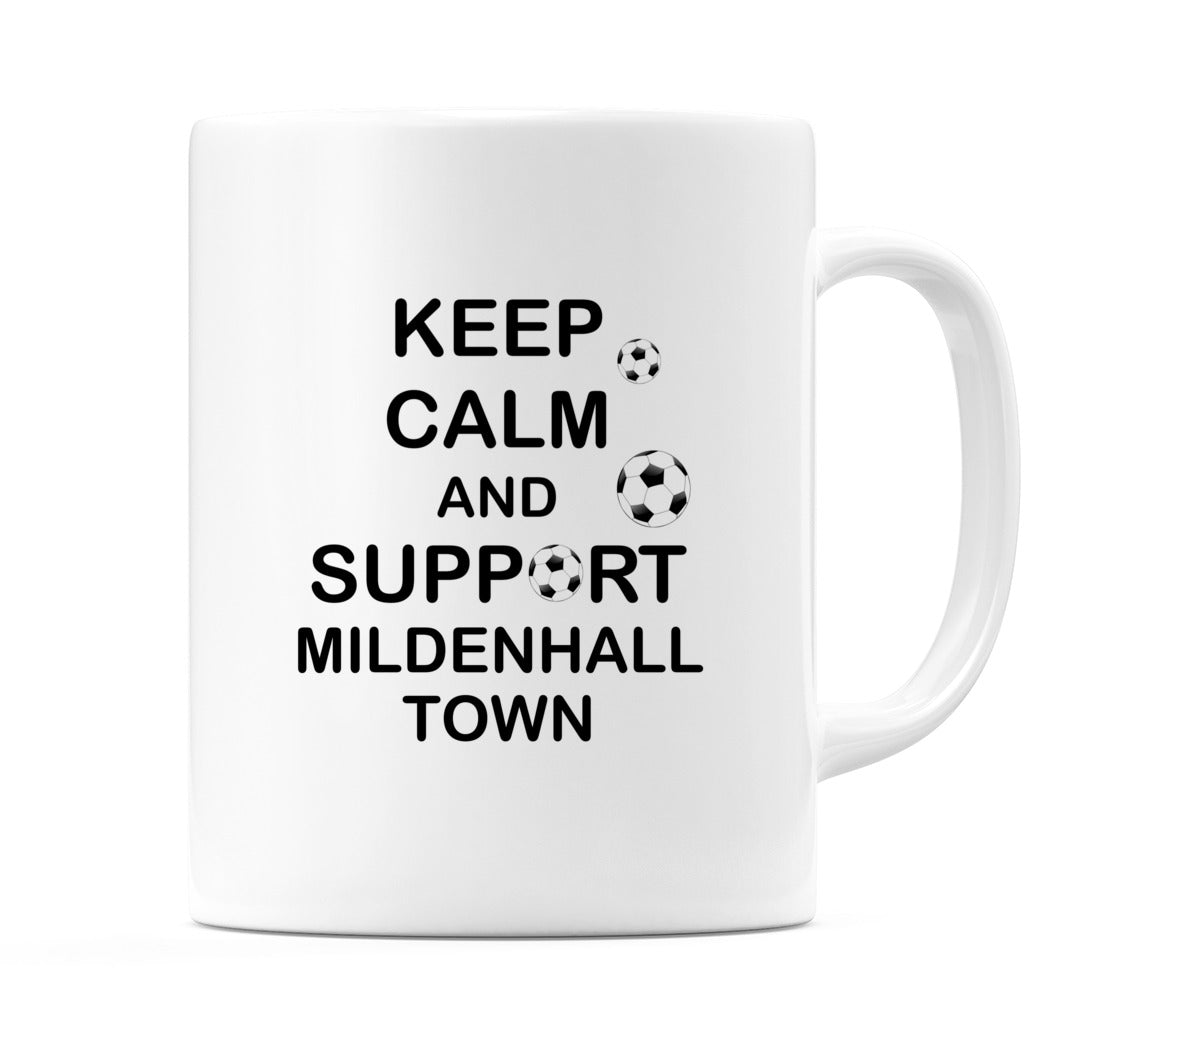 Keep Calm And Support Mildenhall Town Mug